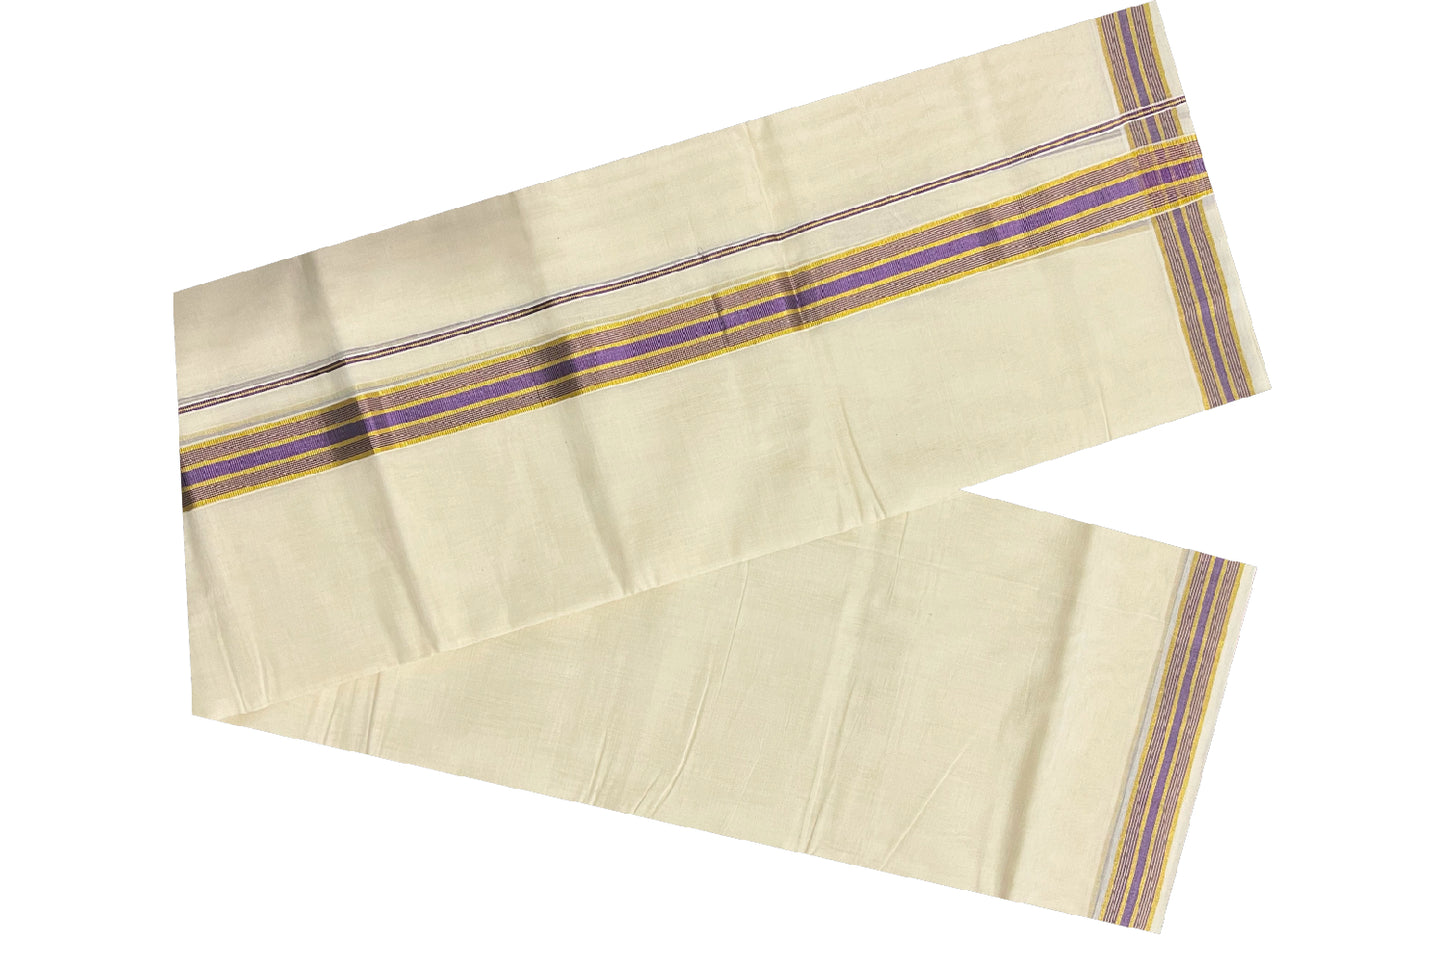 Southloom Balaramapuram Handloom Pure Cotton Mundu with Golden and Violet Kasavu Border (South Indian Dhoti)